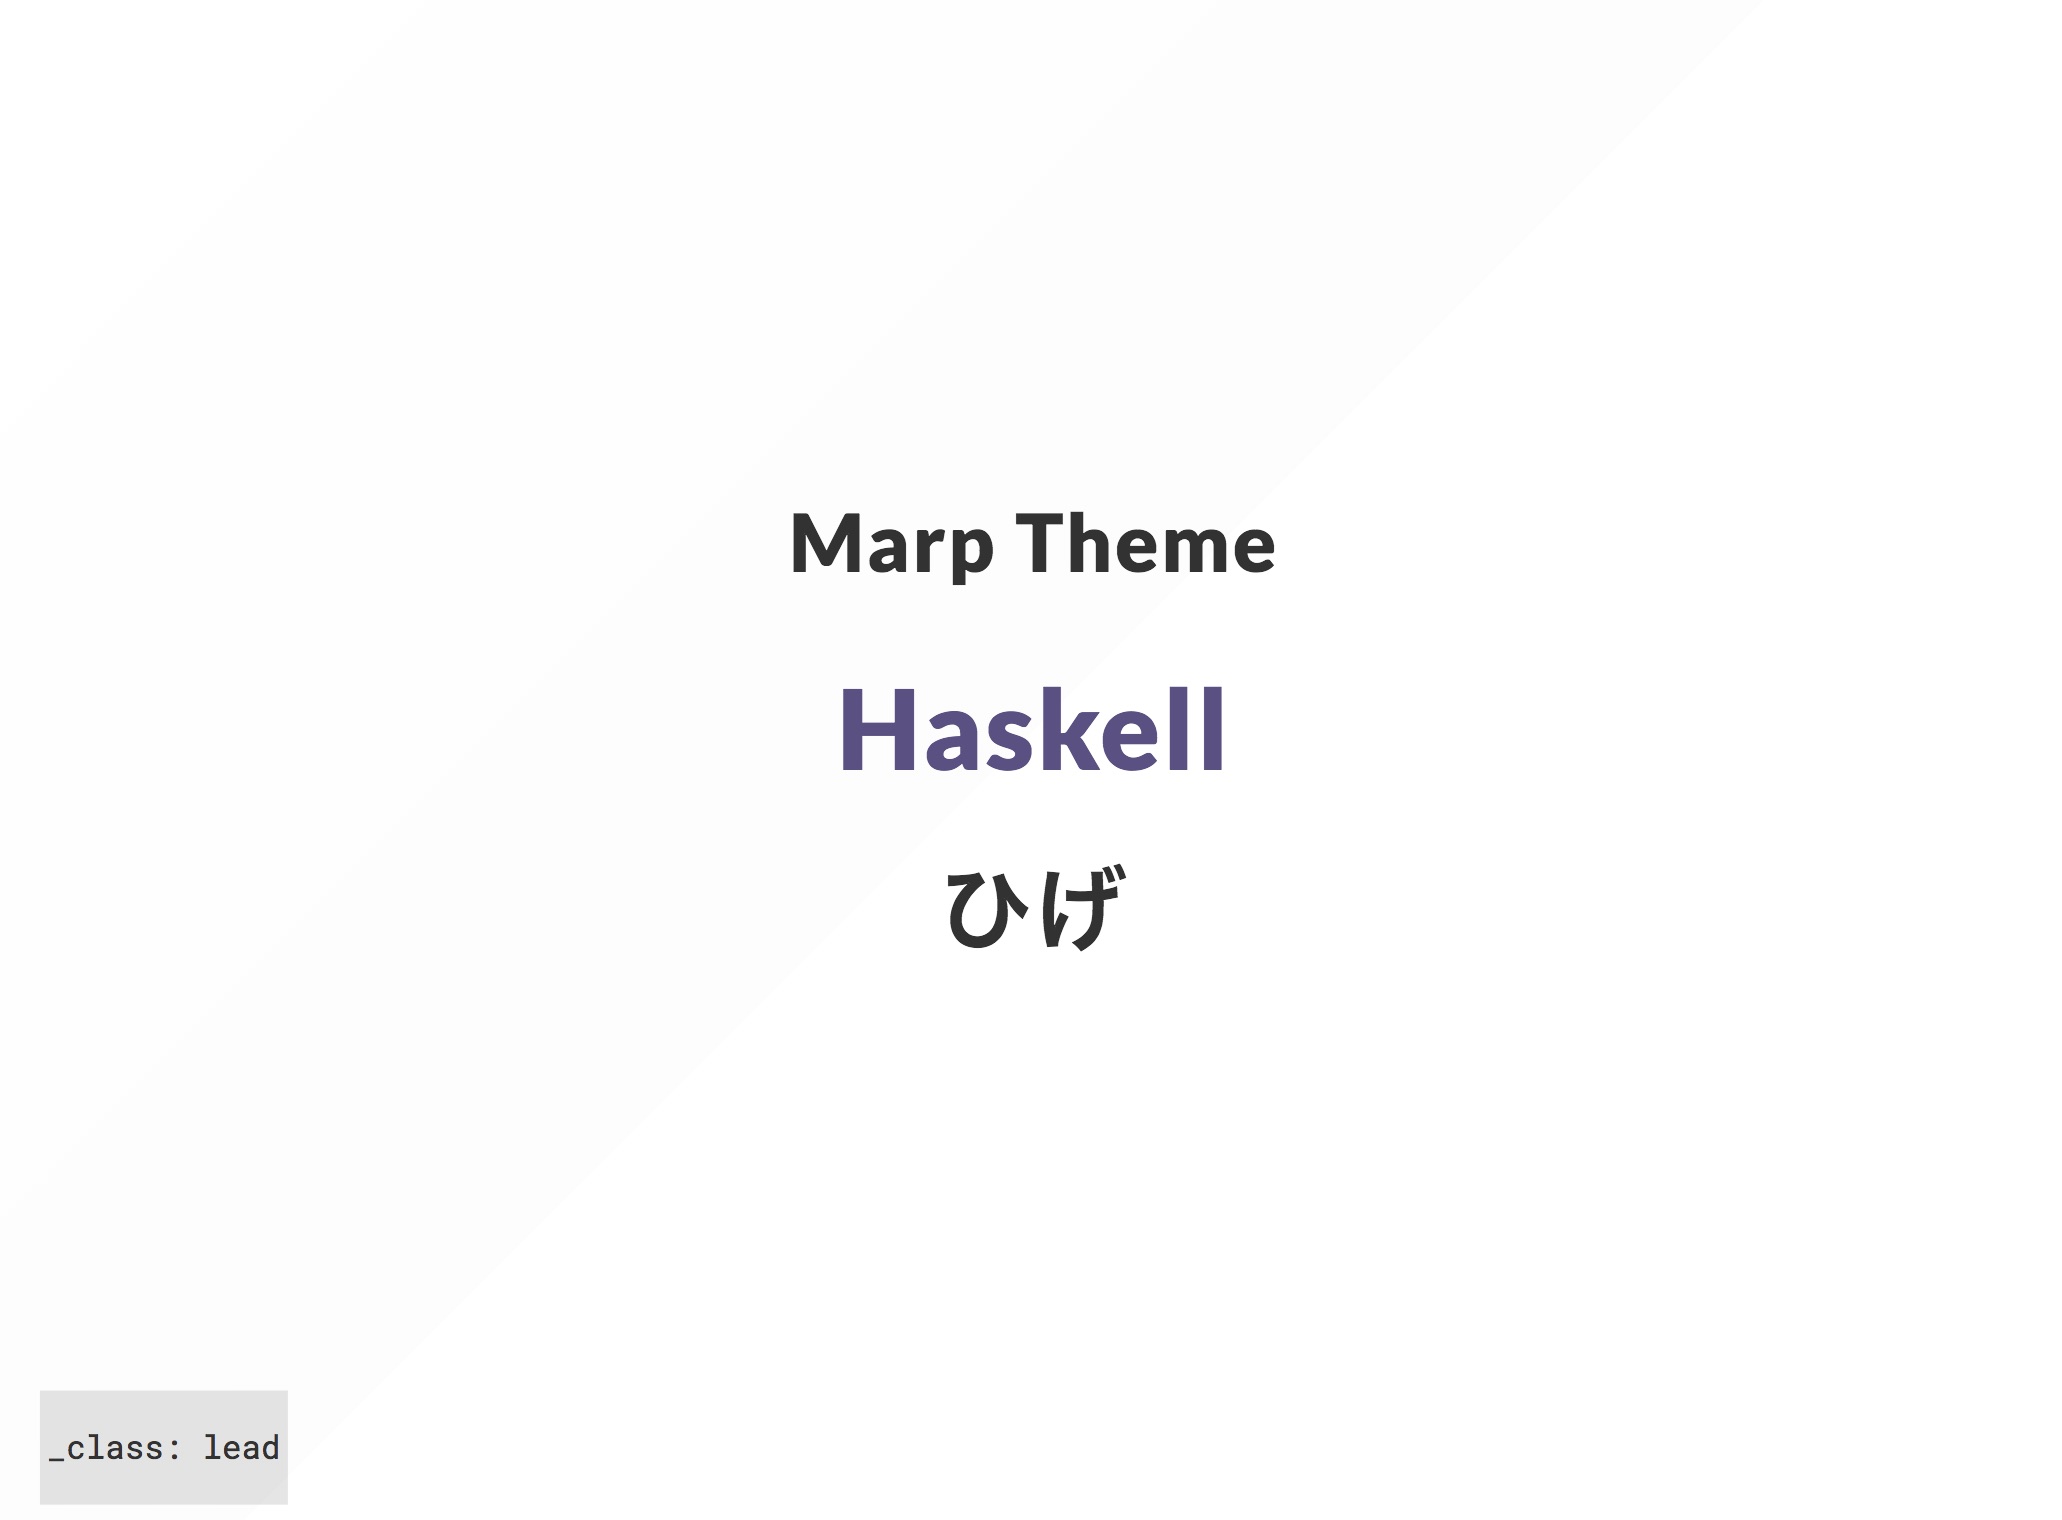 haskell1.jpg